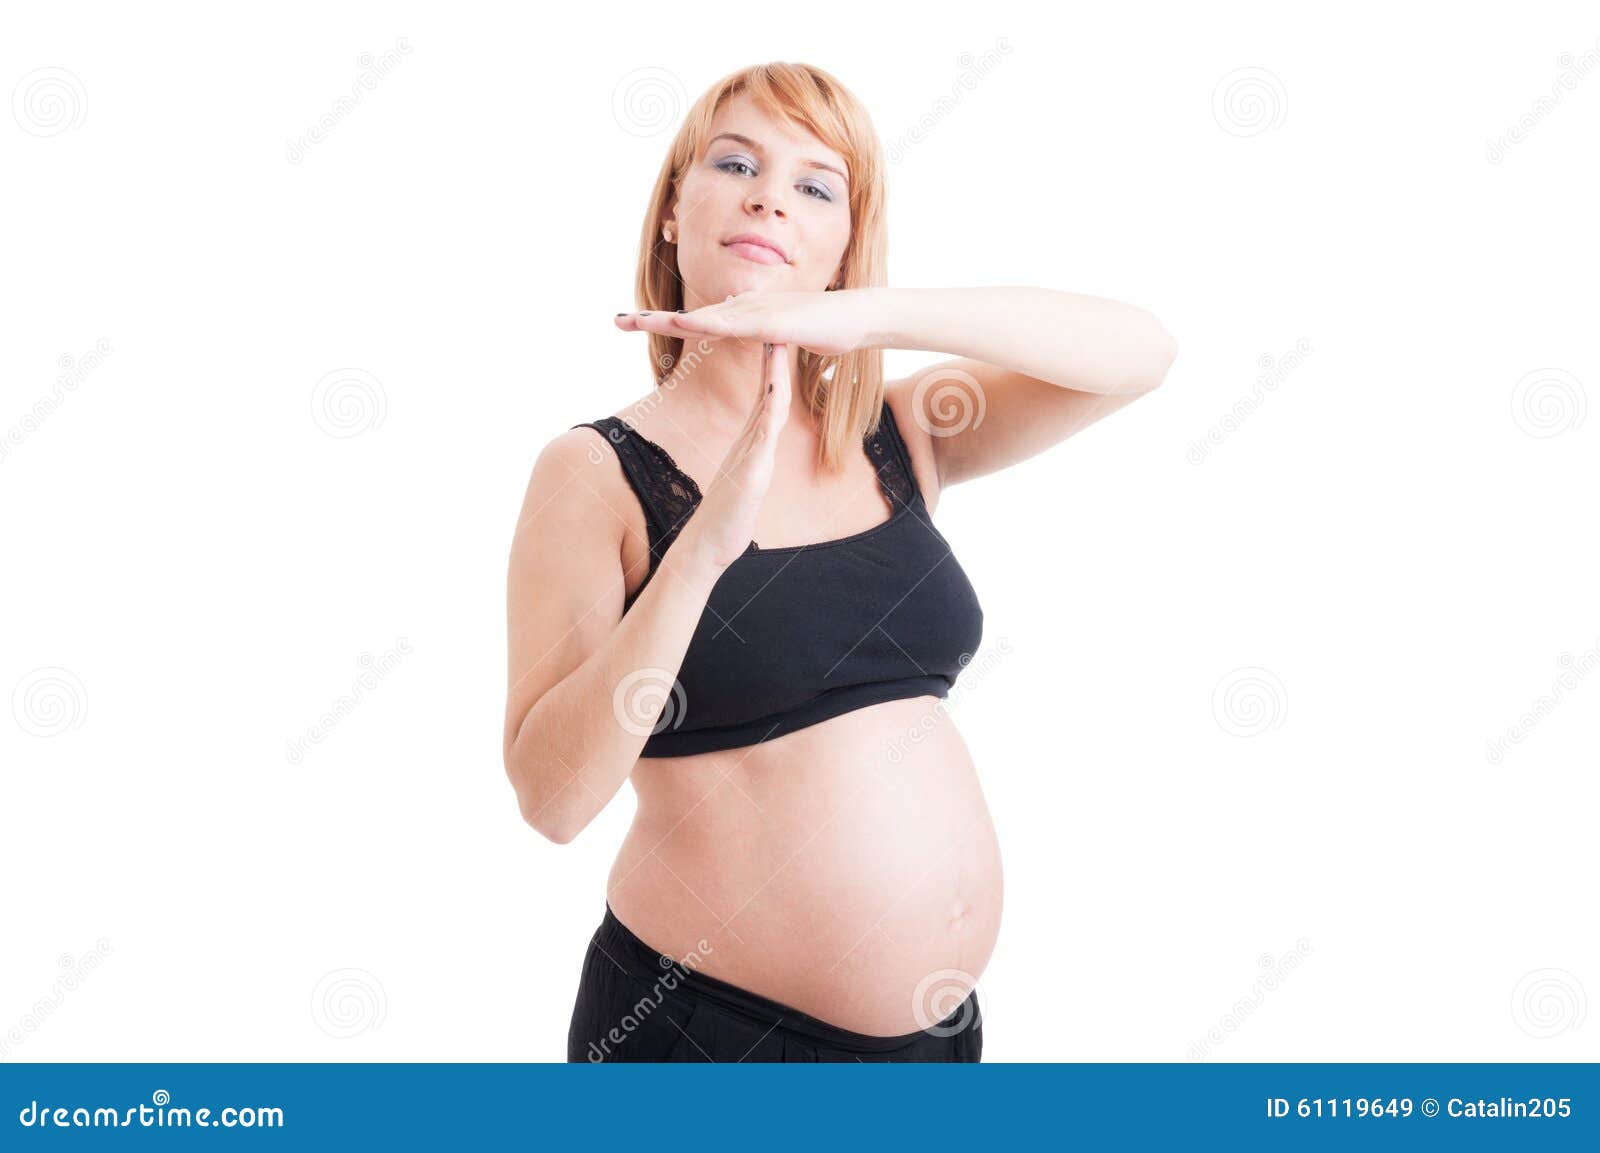 Pregnant Hoes - Sex Nurse Local